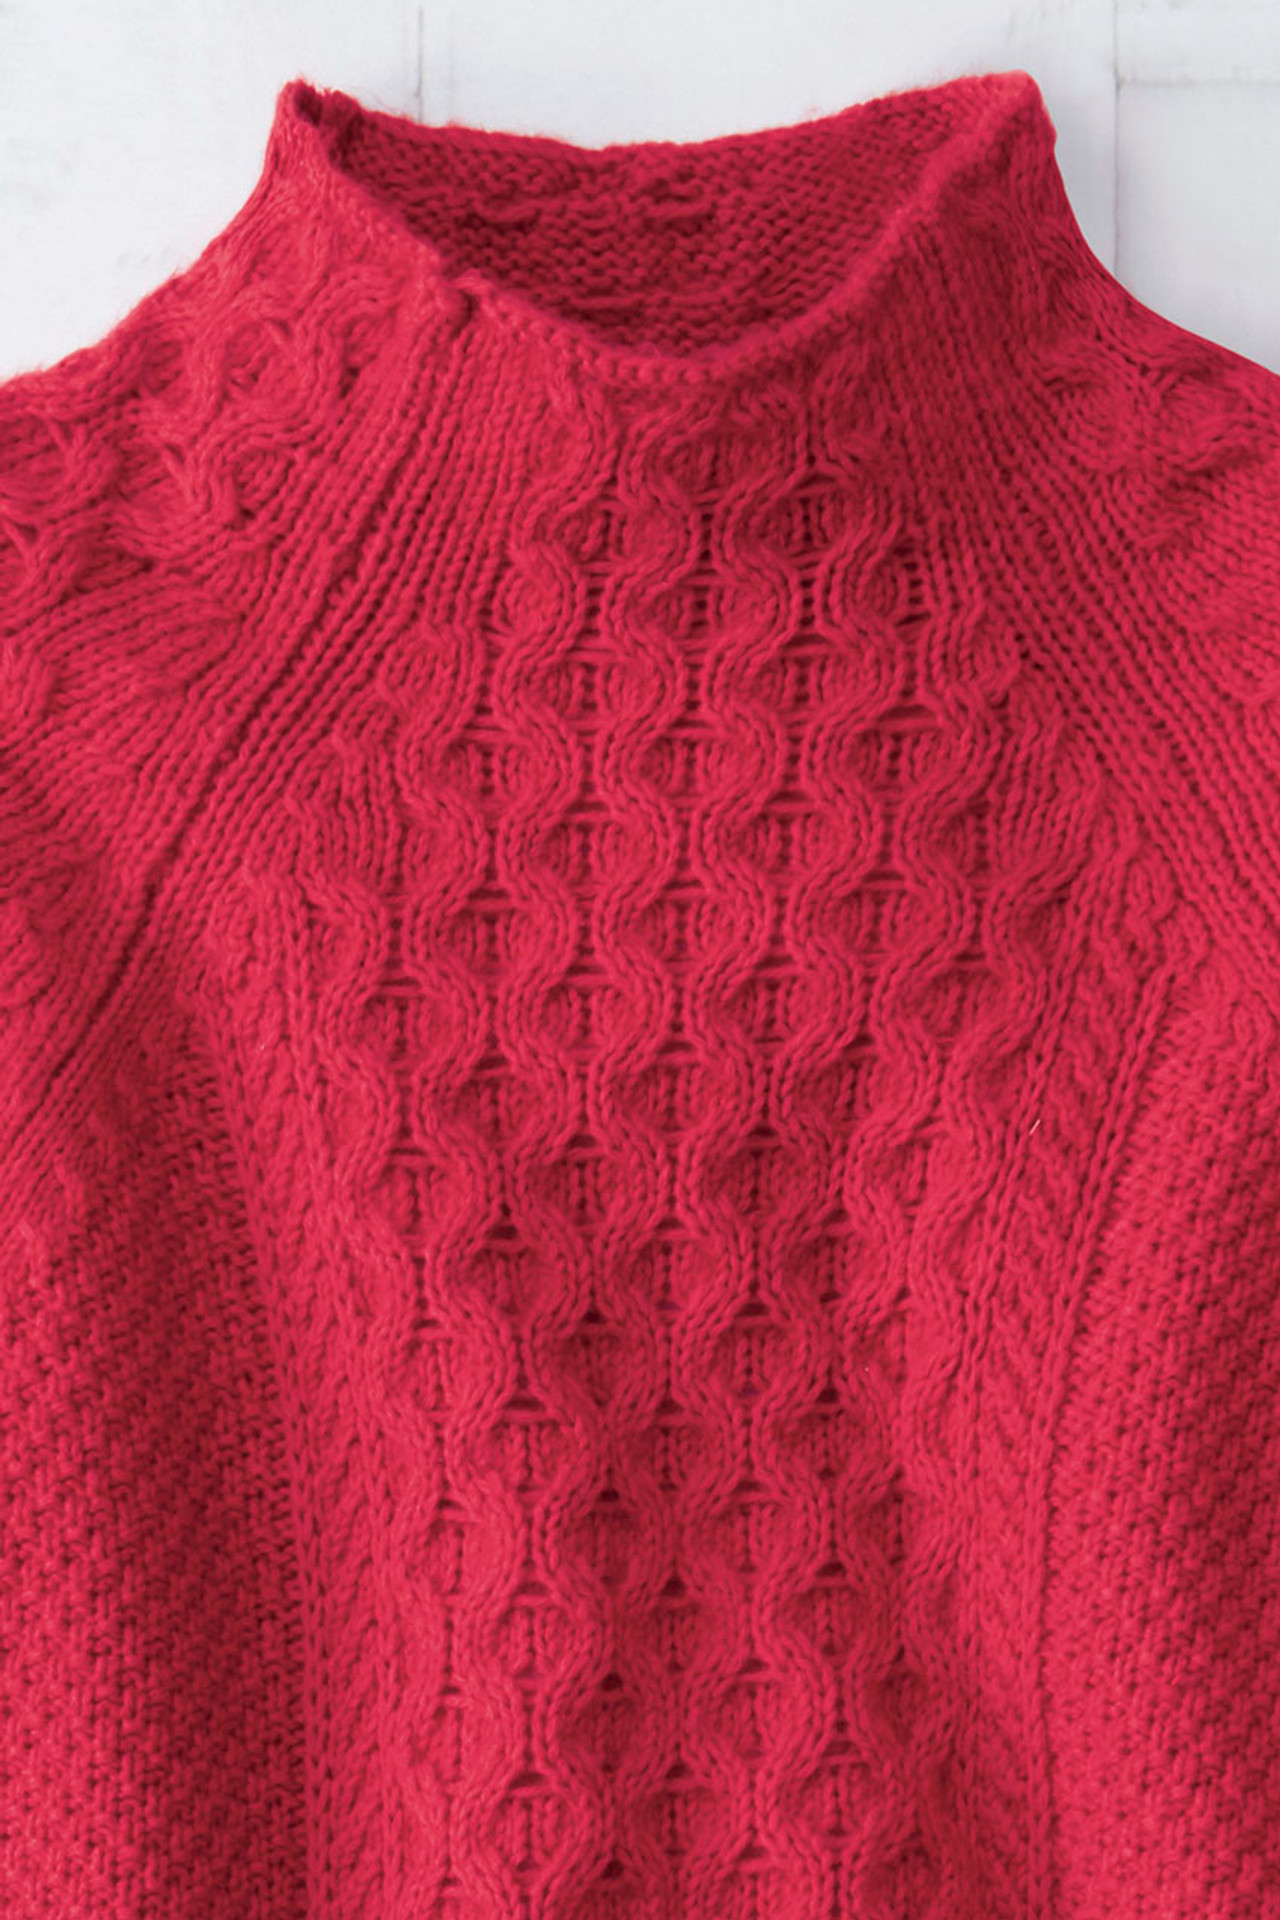 Habitat Clothing Honeycomb Brushed Jacquard Knit Pullover-Gray